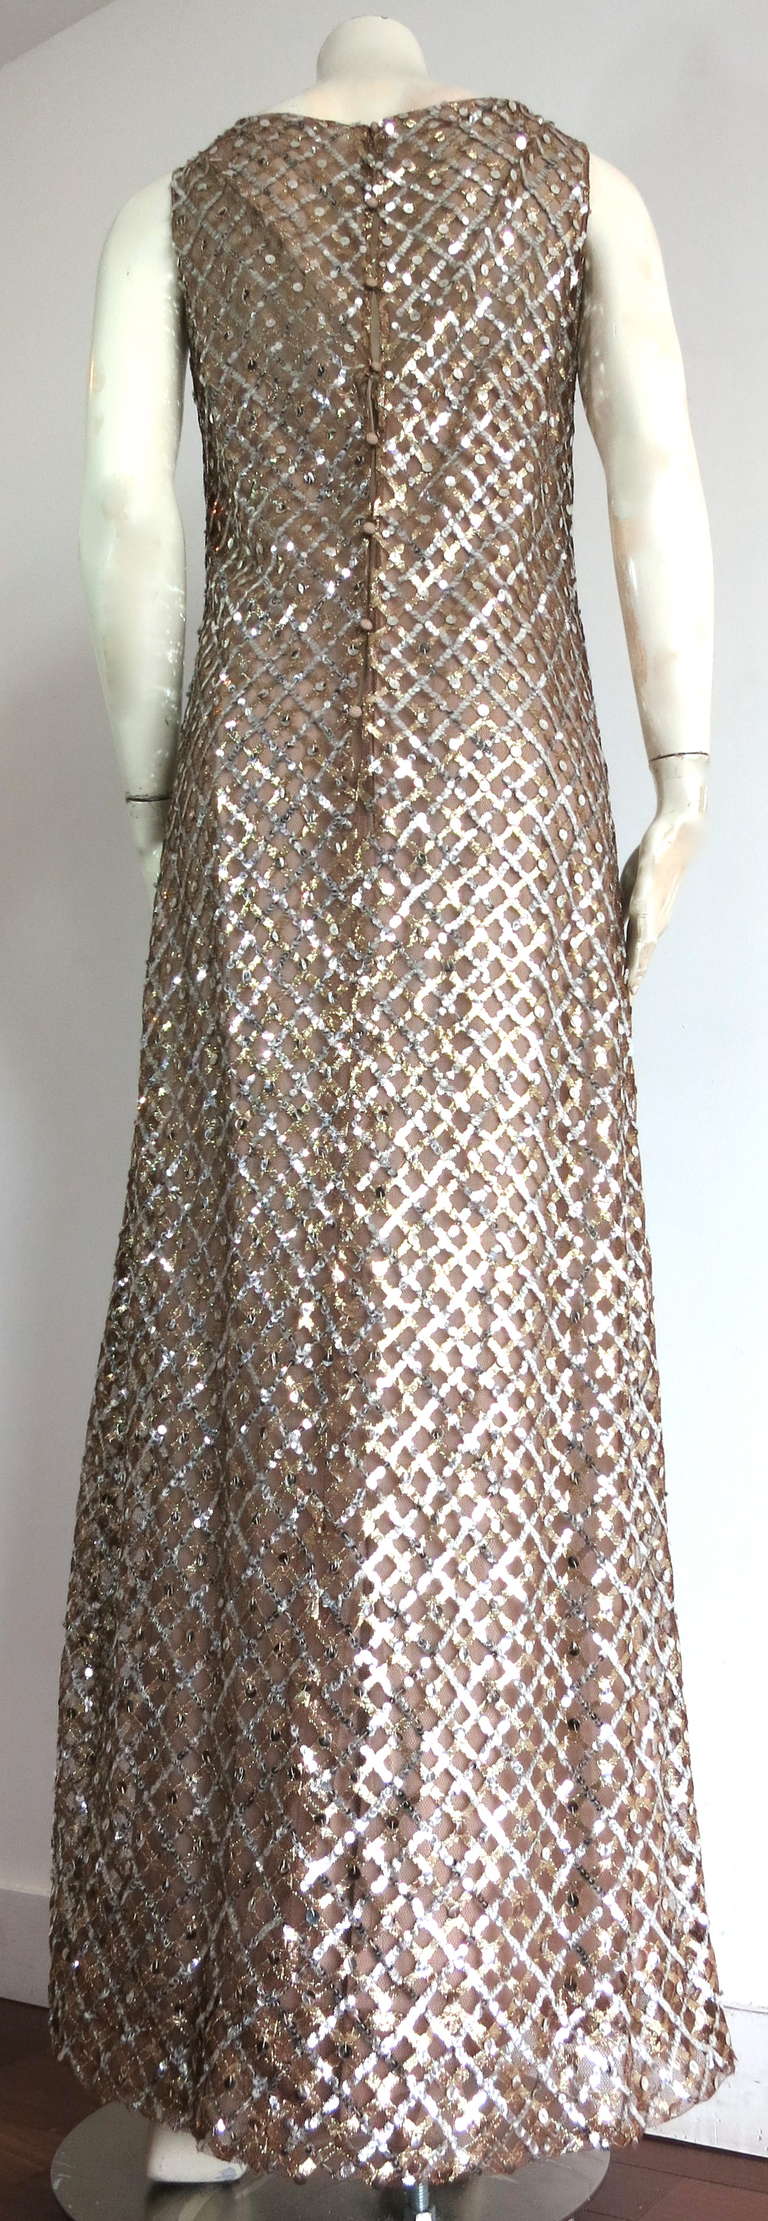 Vintage MALCOLM STARR Metallic dress 1